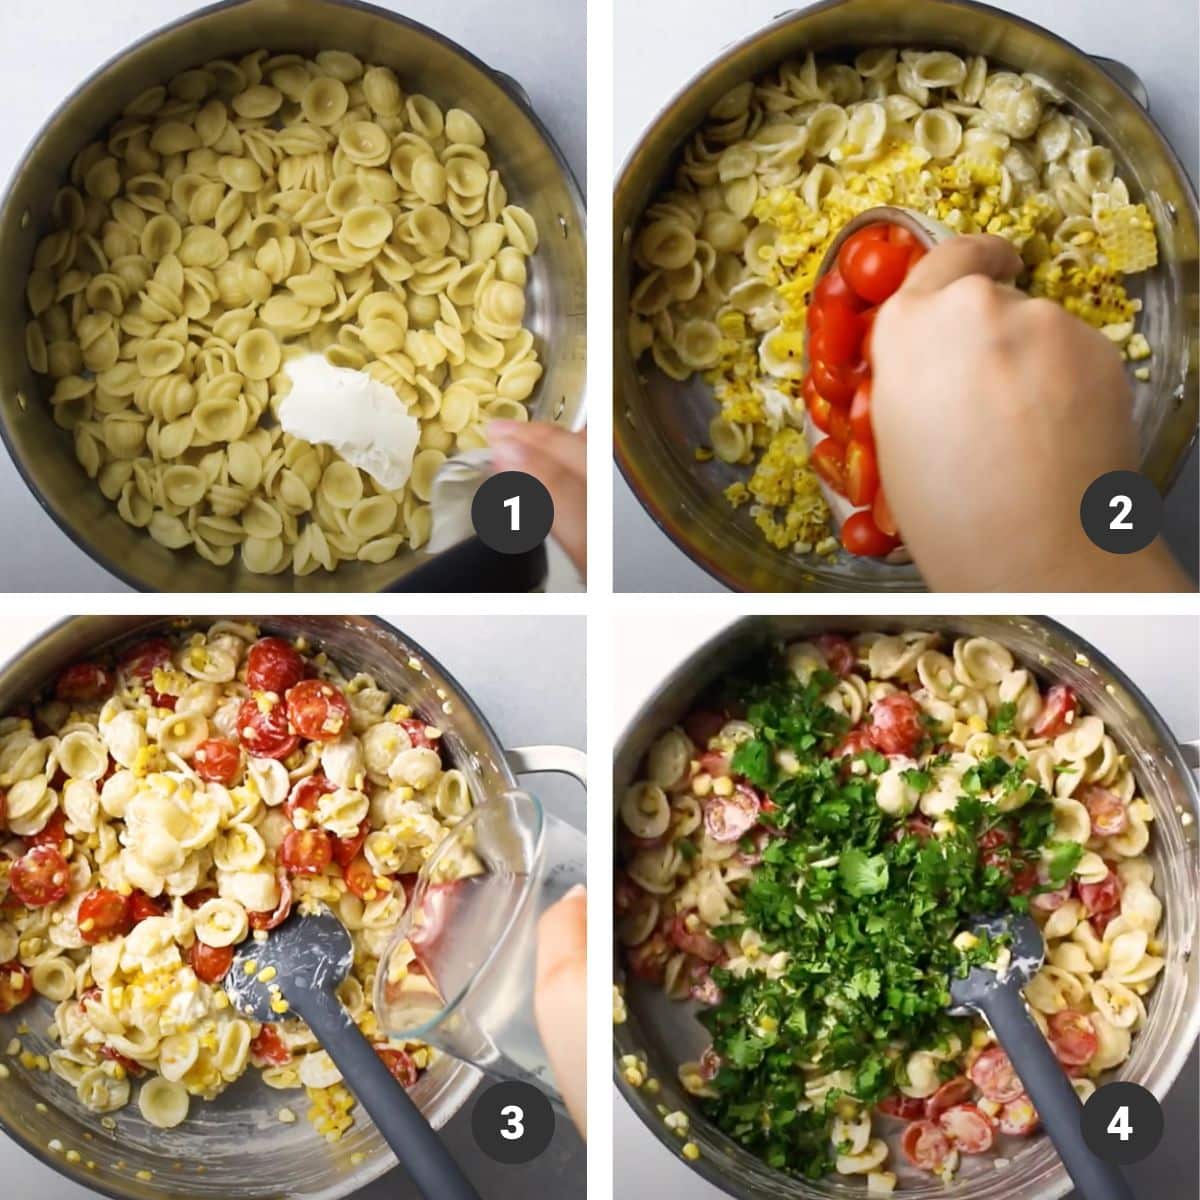 Mixing cream cheese and veggies into pasta.